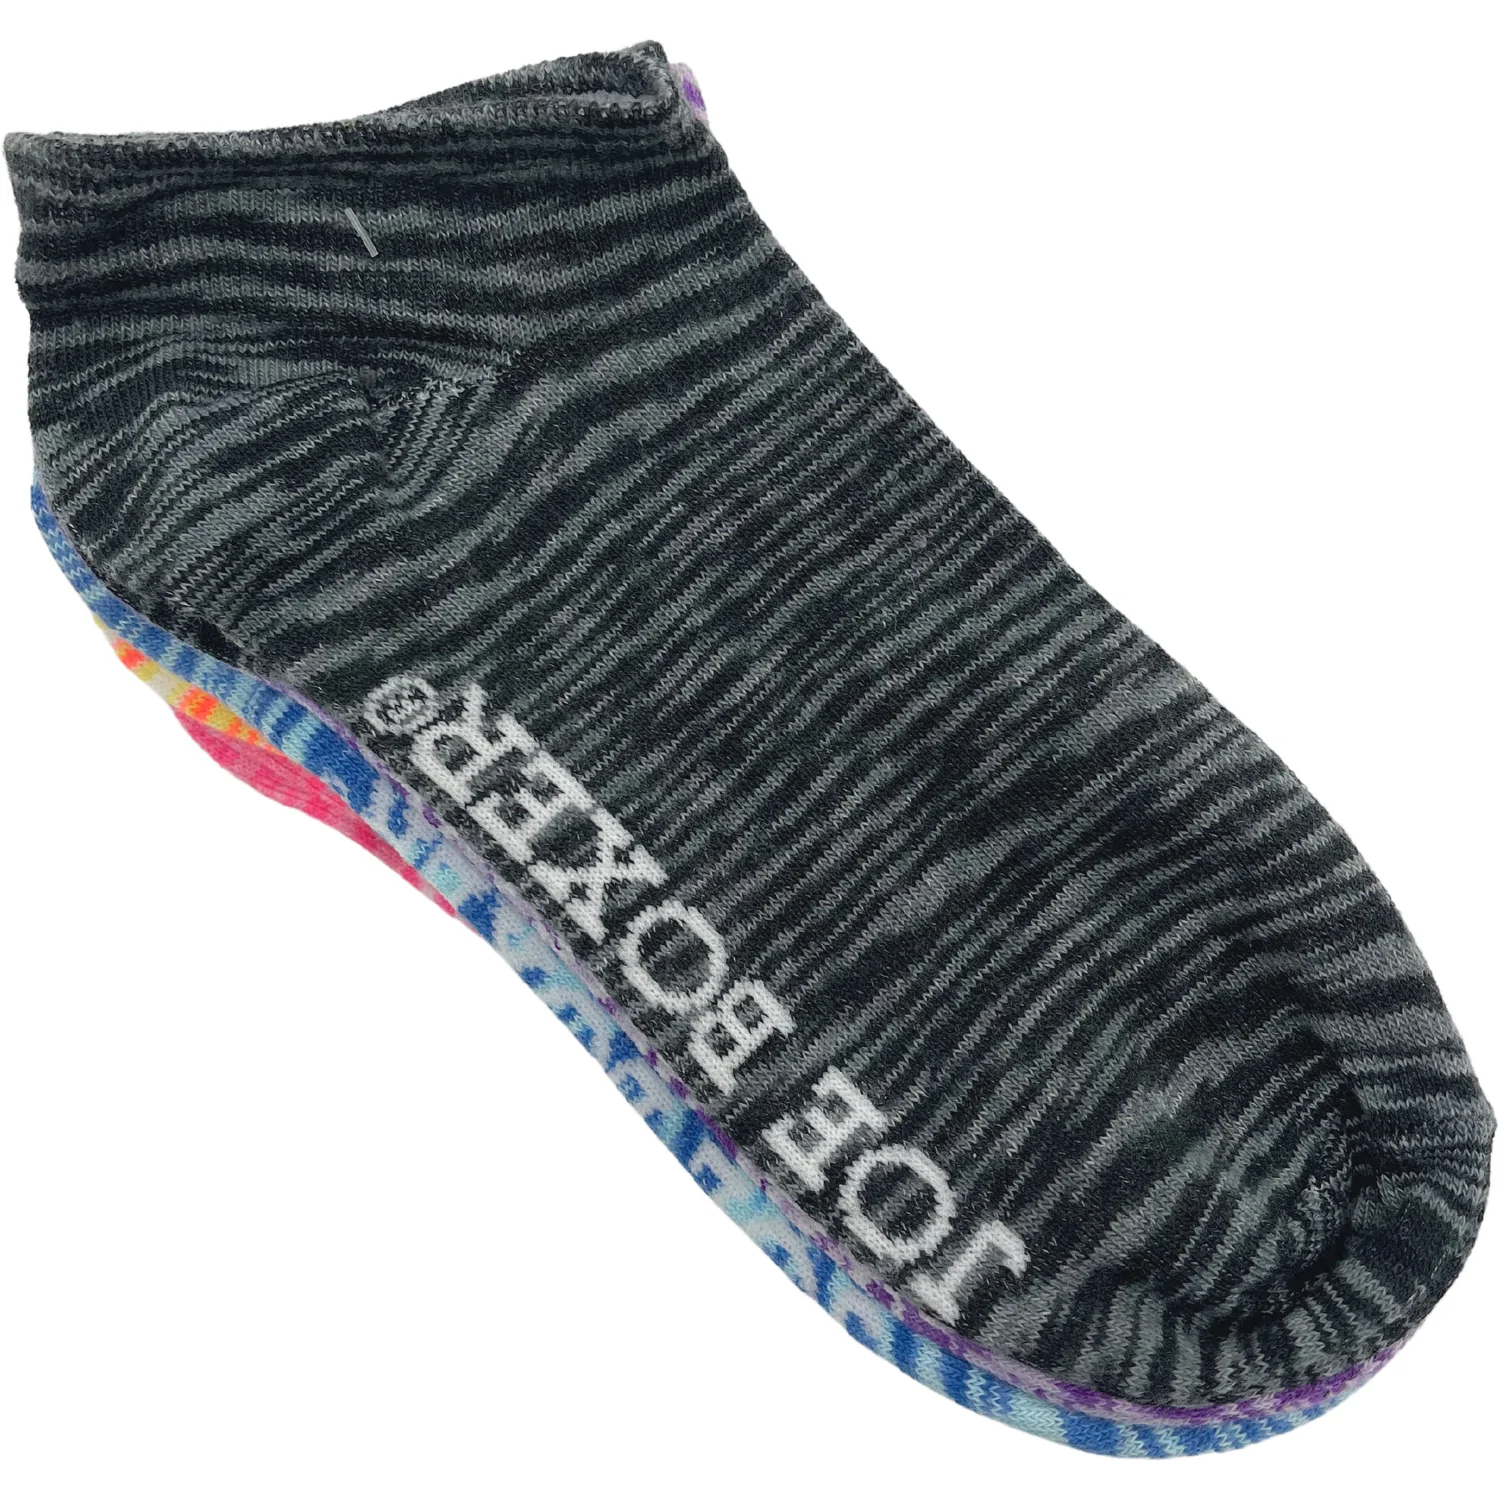 Joe Boxer Women's Socks / No Show Socks / 6 Pairs / Rainbow Pack / Stripe Pattern / Shoe Size 4-10